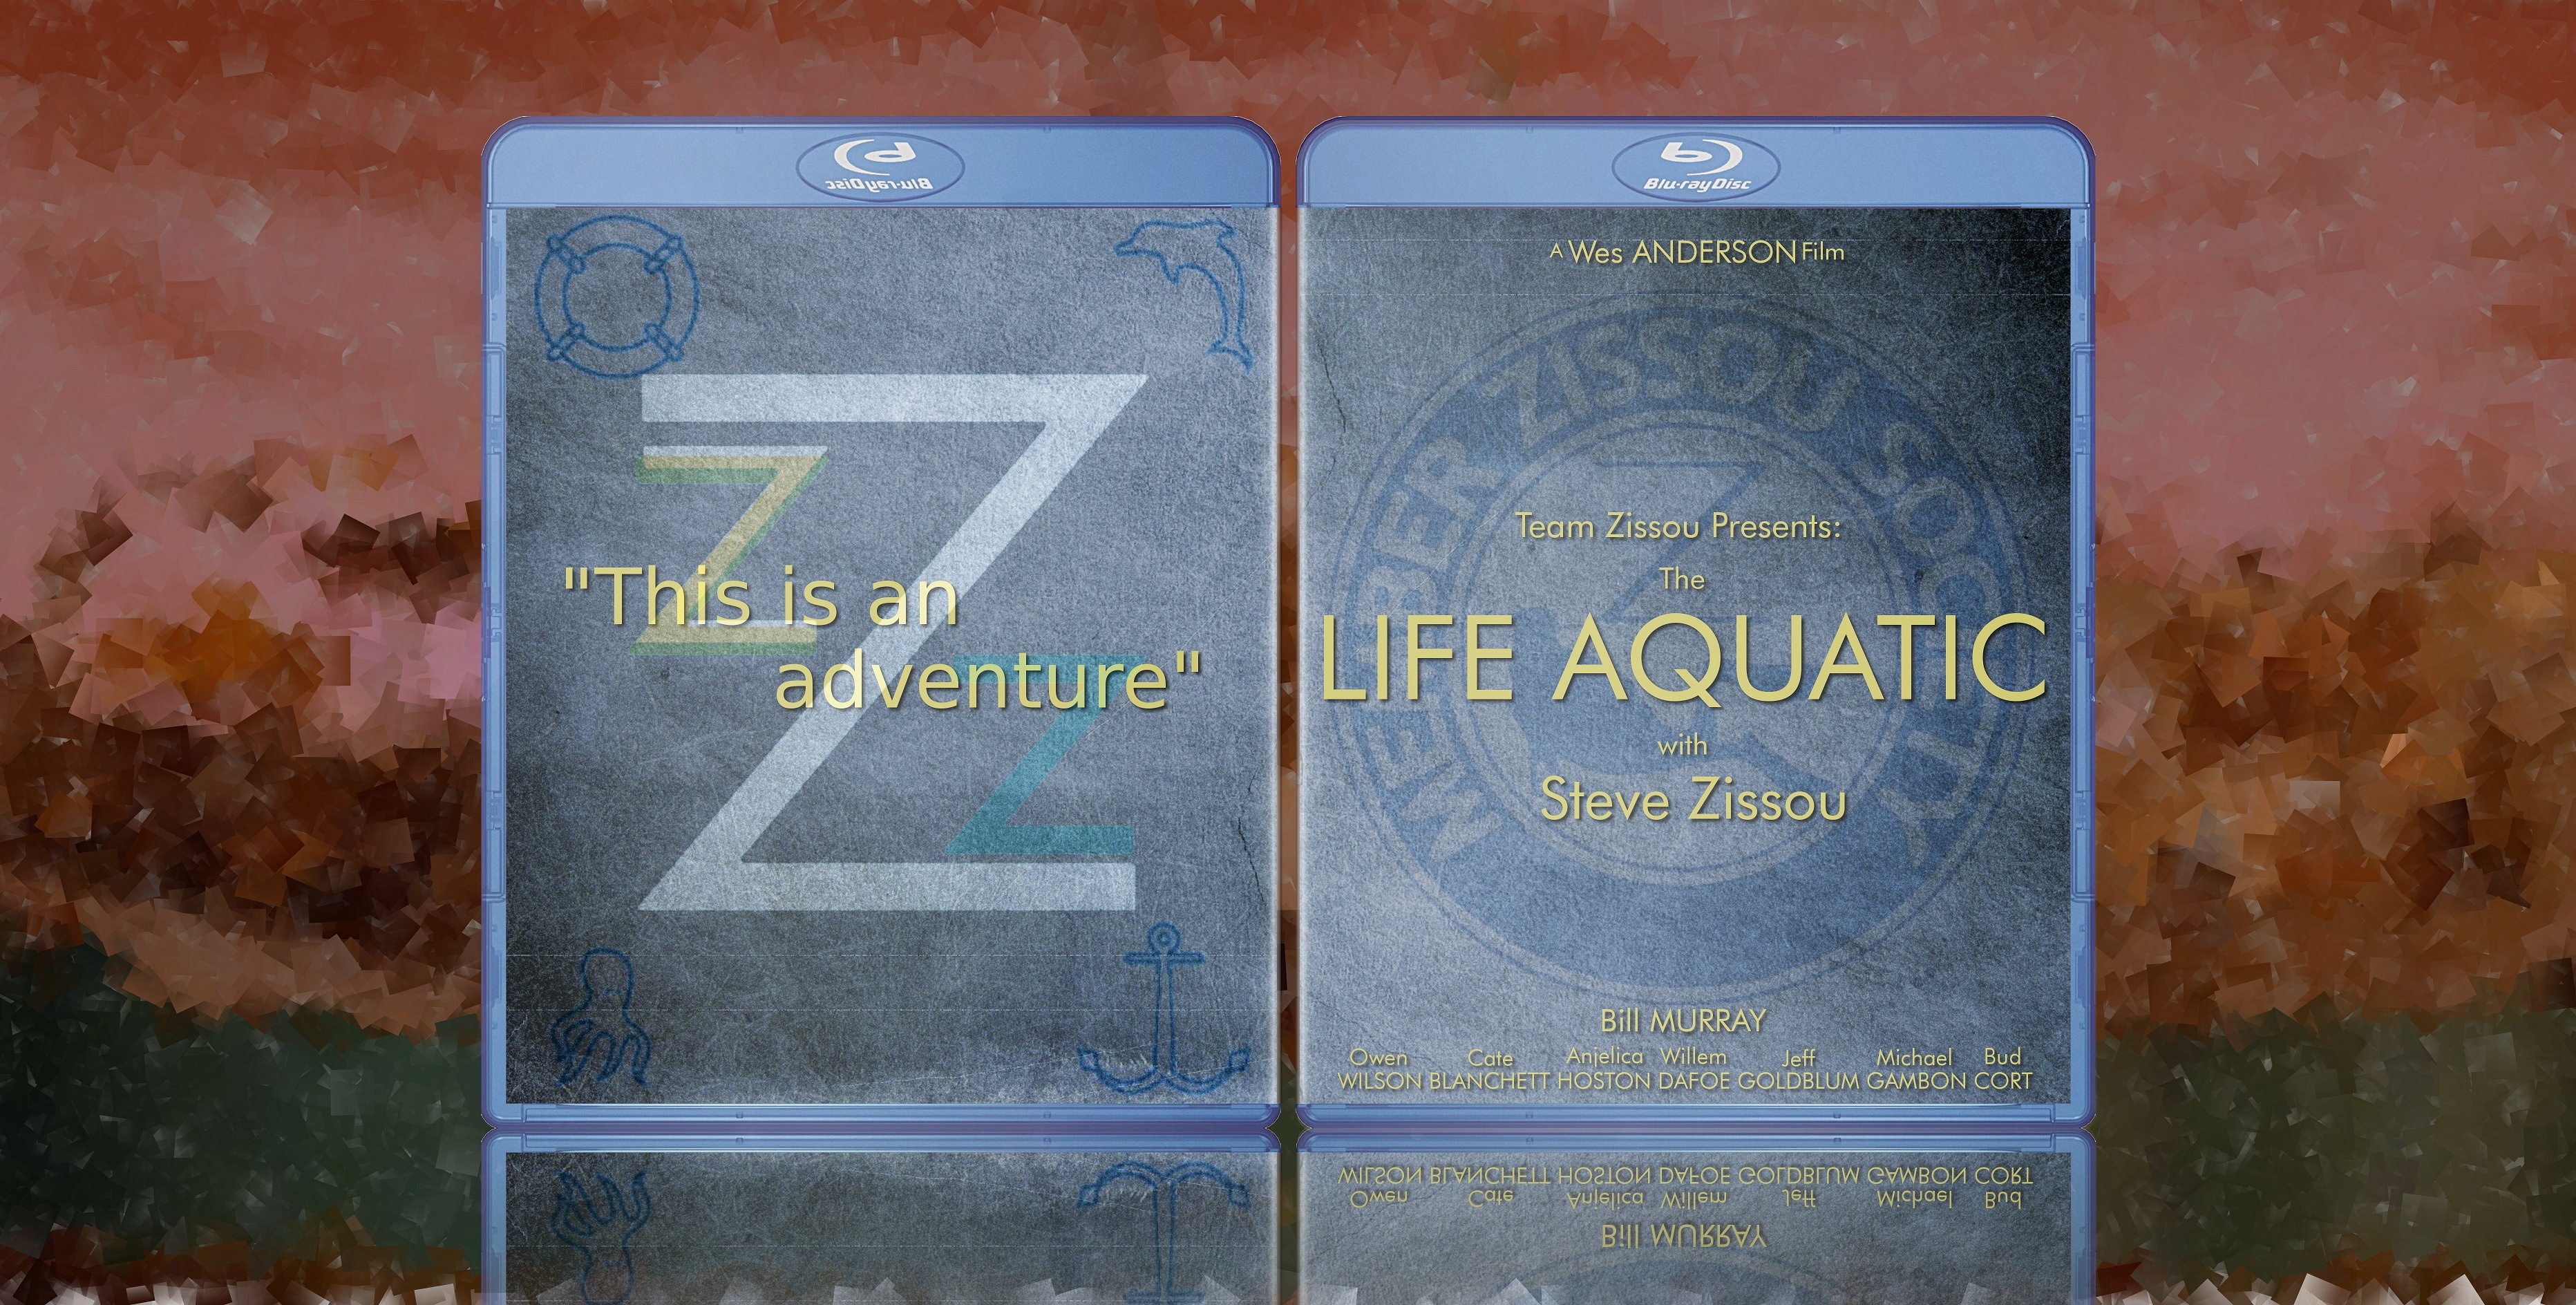 The Life Aquatic with Steve Zissou box cover